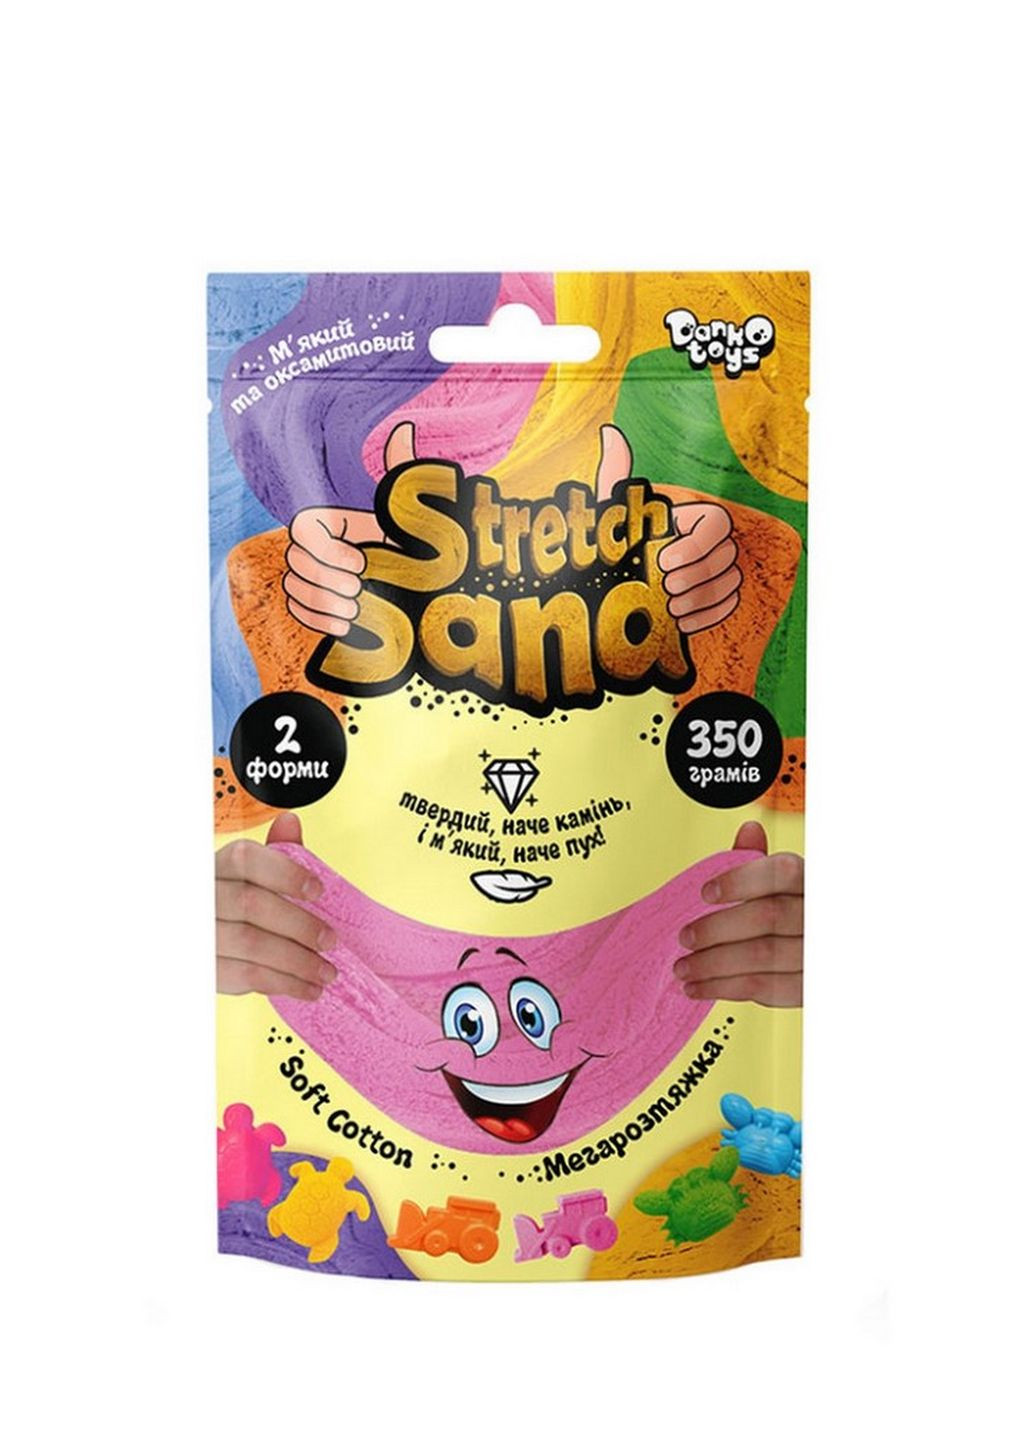 Набор креативного творчества "Stretch Sand" STS-04-02U пакет 350 гр (Розовый) Danko Toys (266631734)